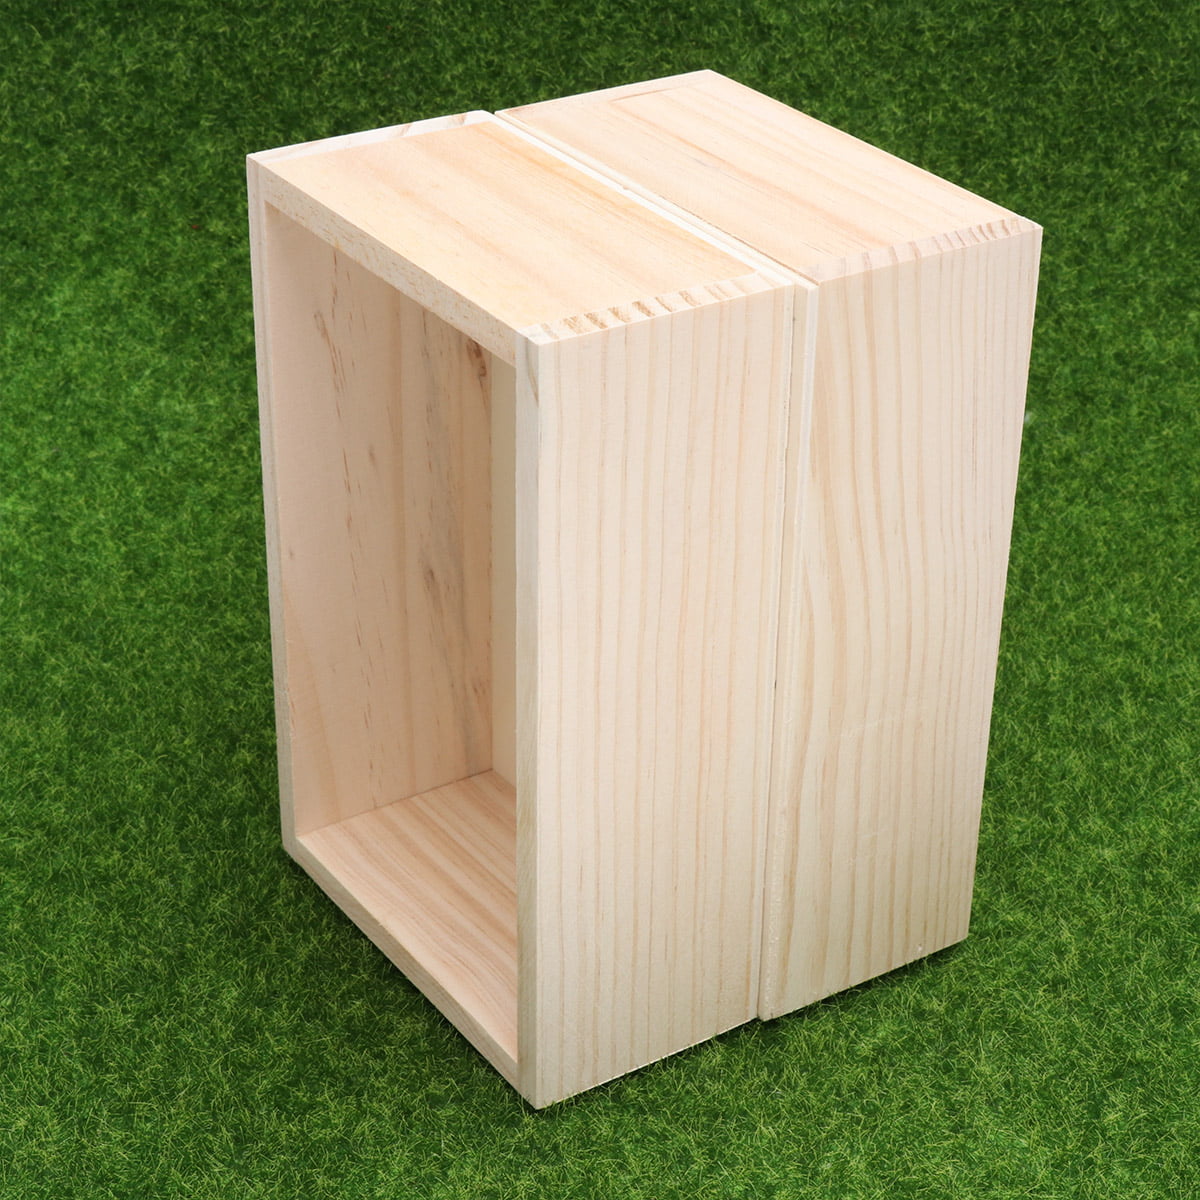 Earth-Tone Mini Wood Box: Simple and Versatile Storage Solution